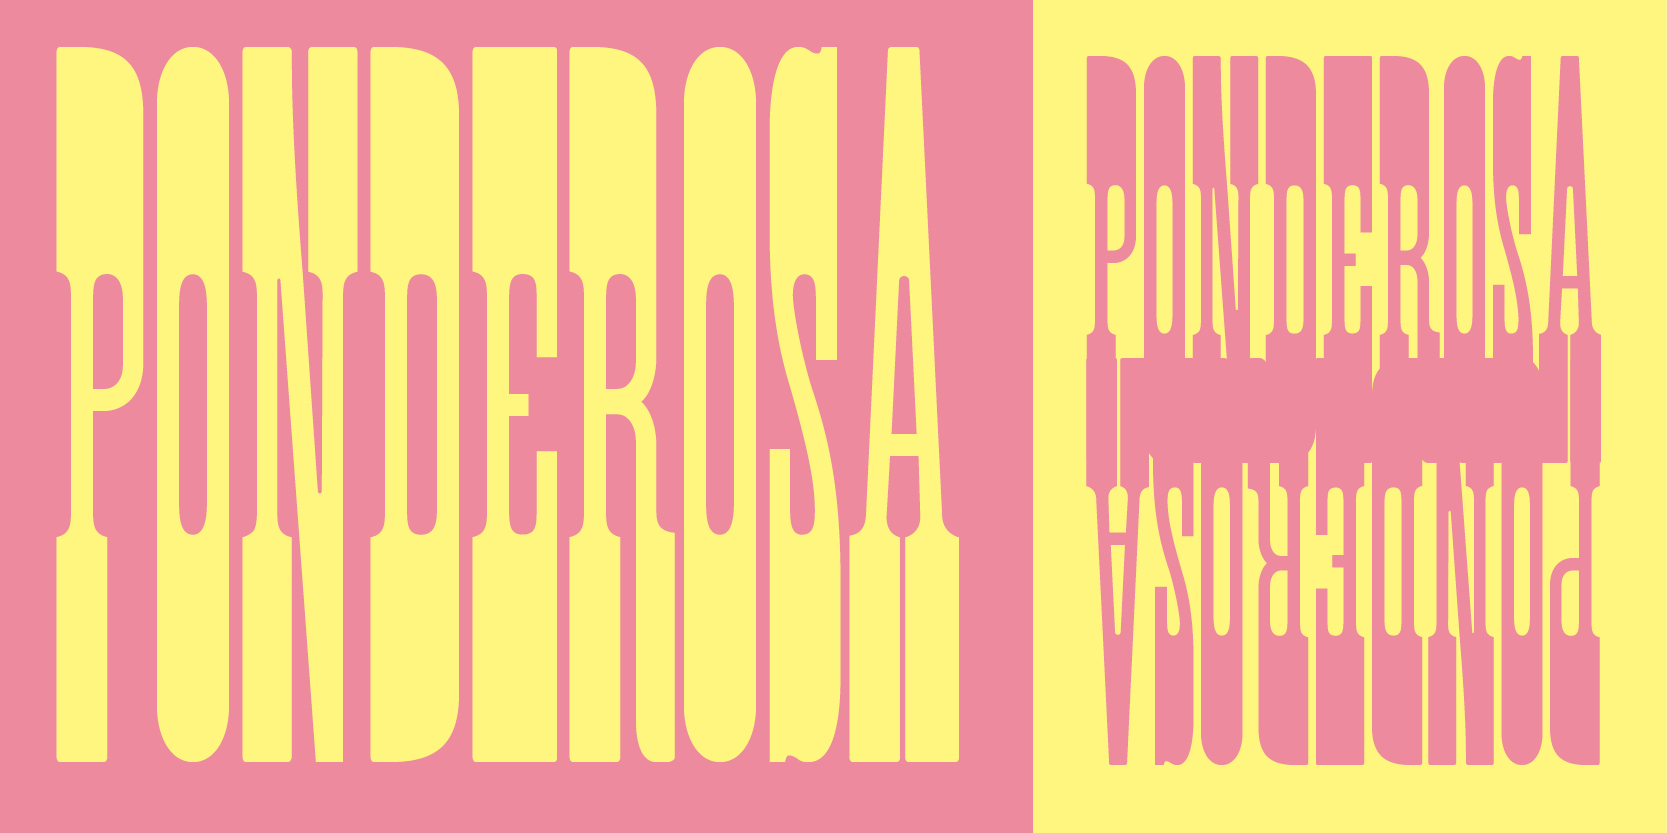 Card displaying Ponderosa Std typeface in various styles